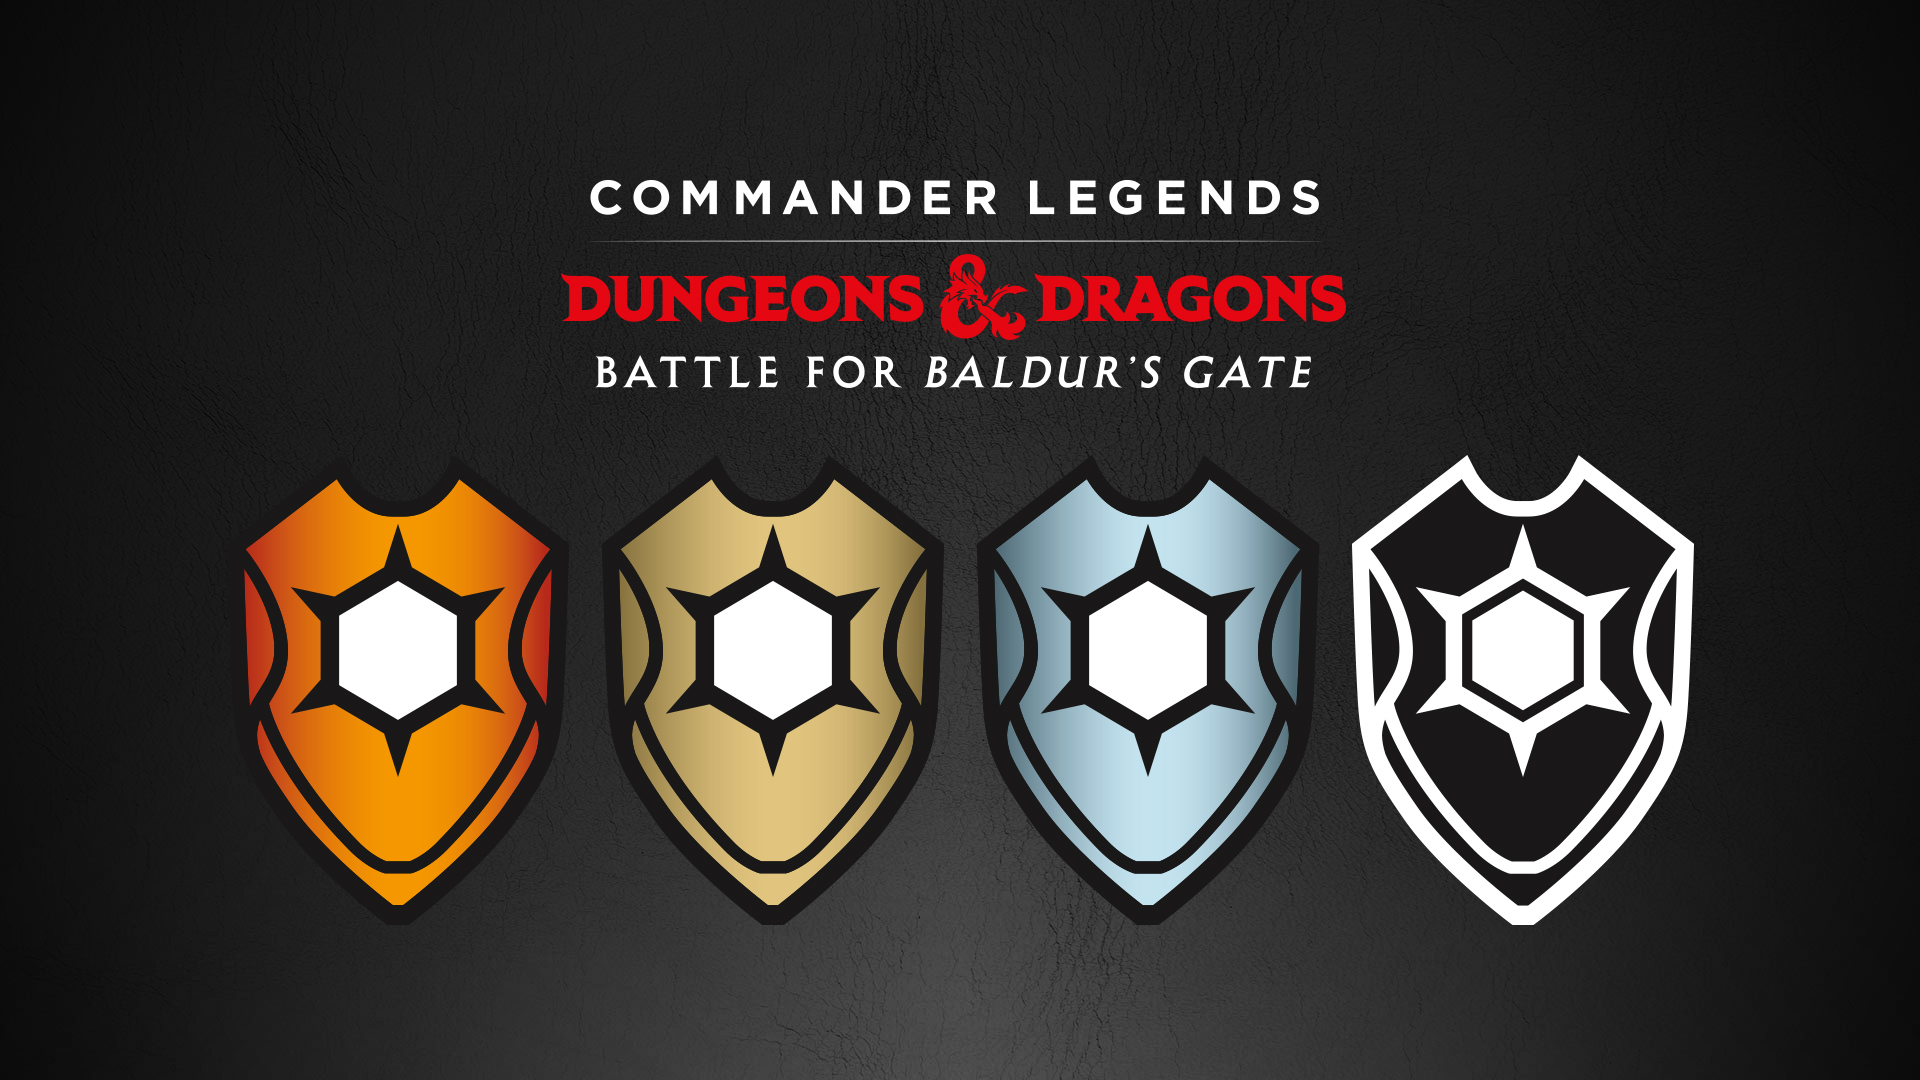 Volo, Itinerant Scholar · Commander Legends: Battle for Baldur's